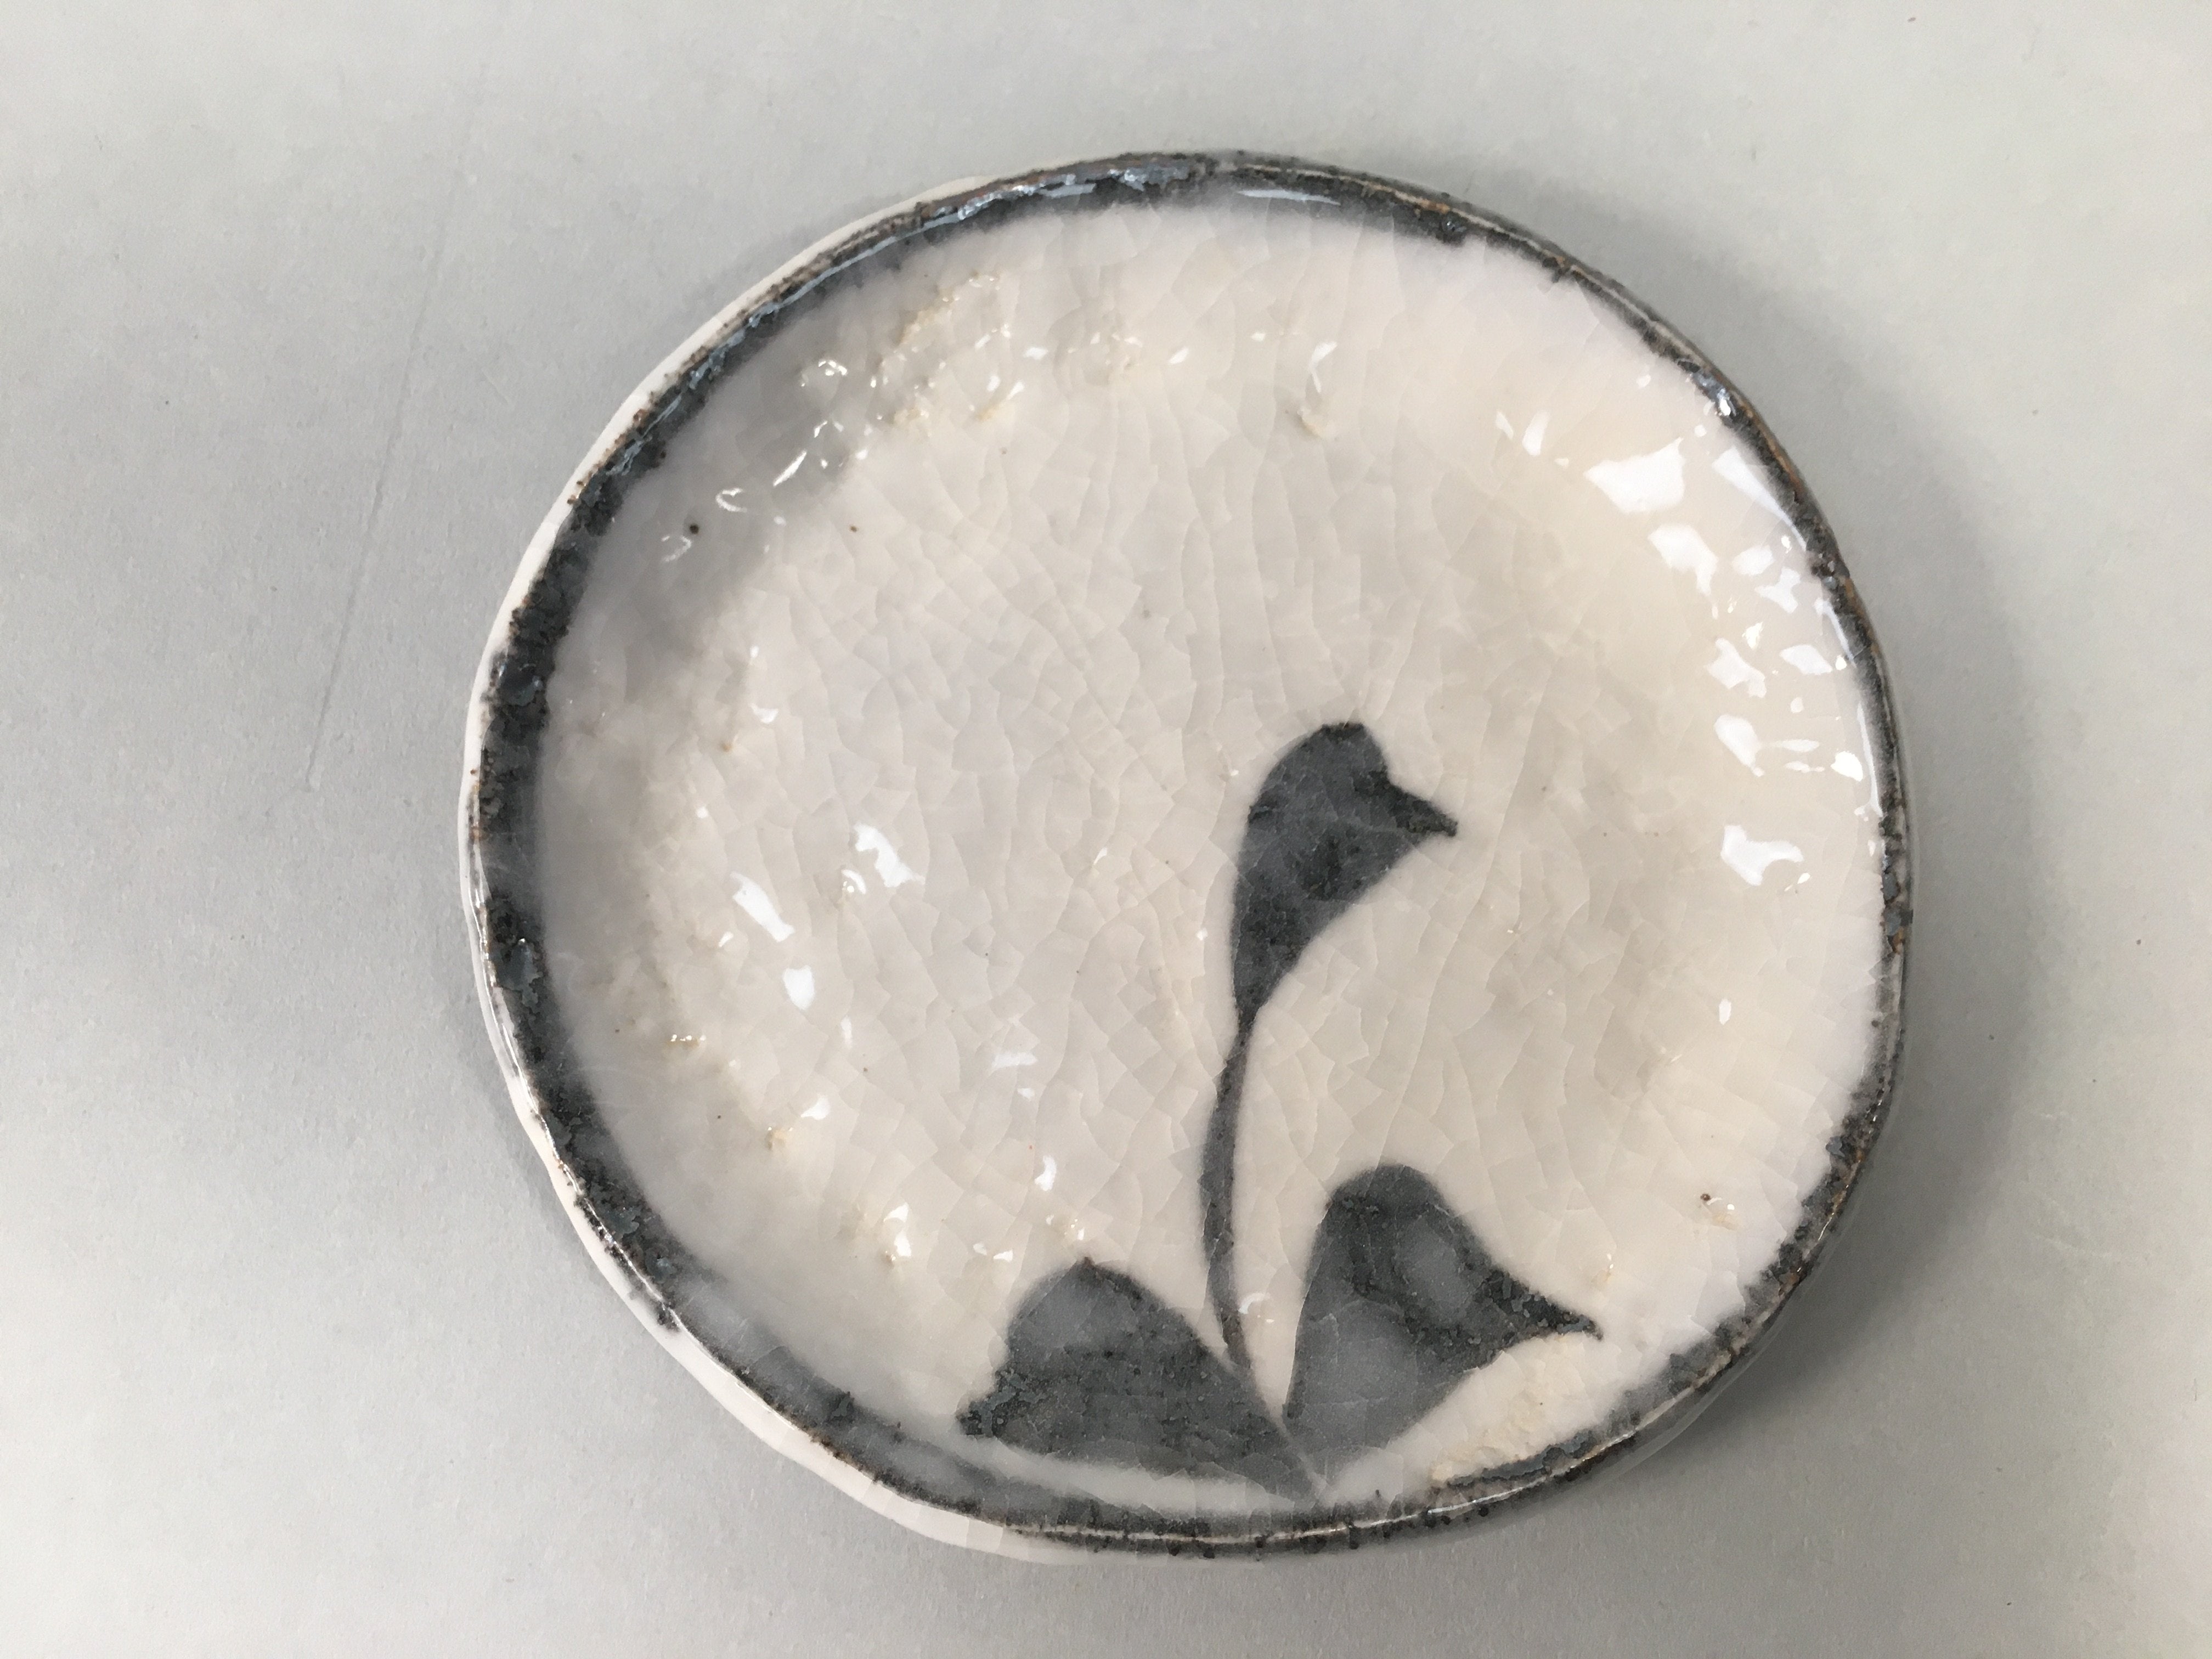 Japanese Ceramic Small Plate Shino Kozara Vtg Round Pottery White Gray PP447